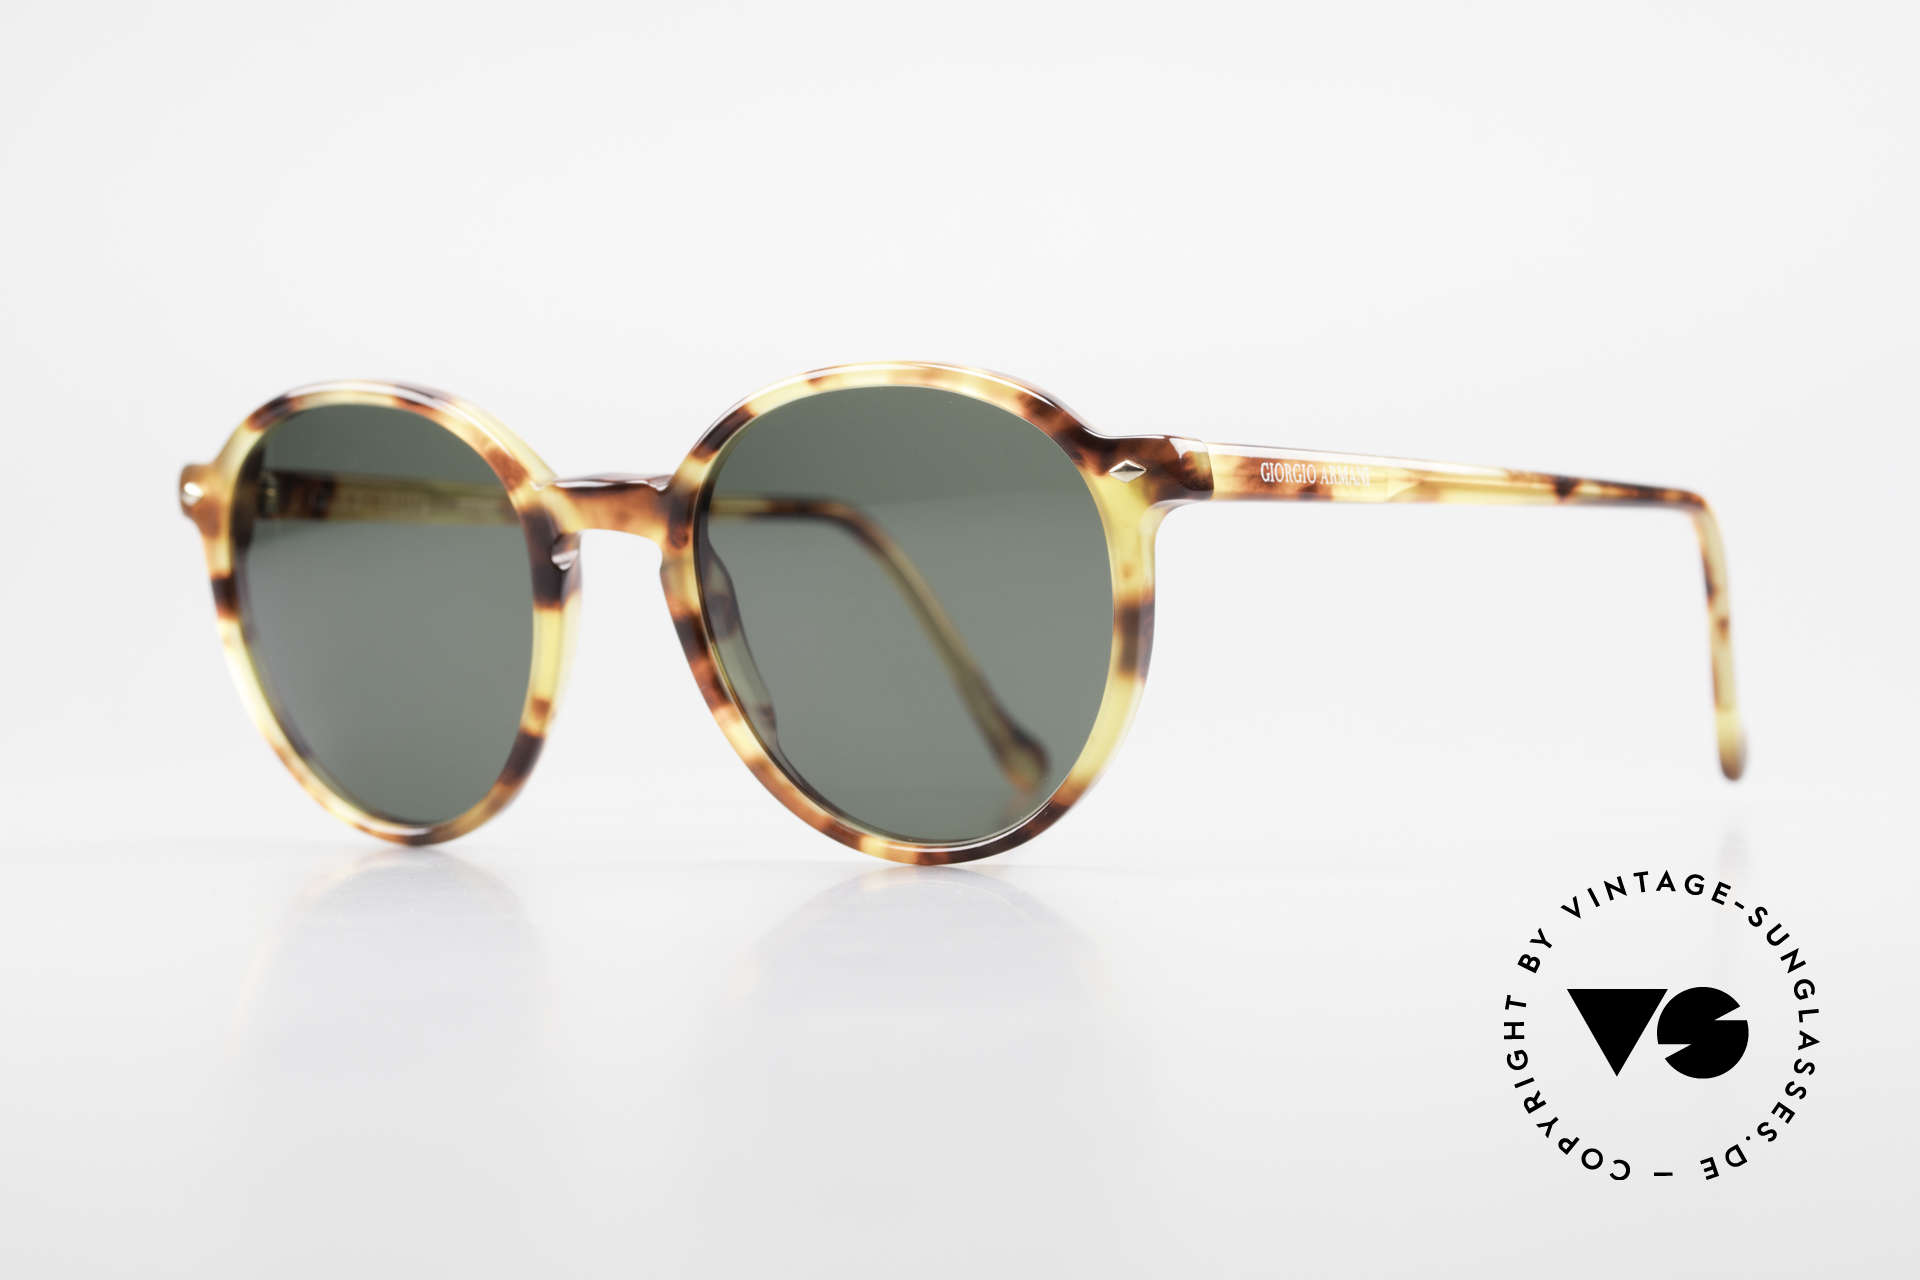 Giorgio Armani 325 Old Panto 90's Sunglasses, premium Italian craftsmanship & 100% UV protection, Made for Men and Women